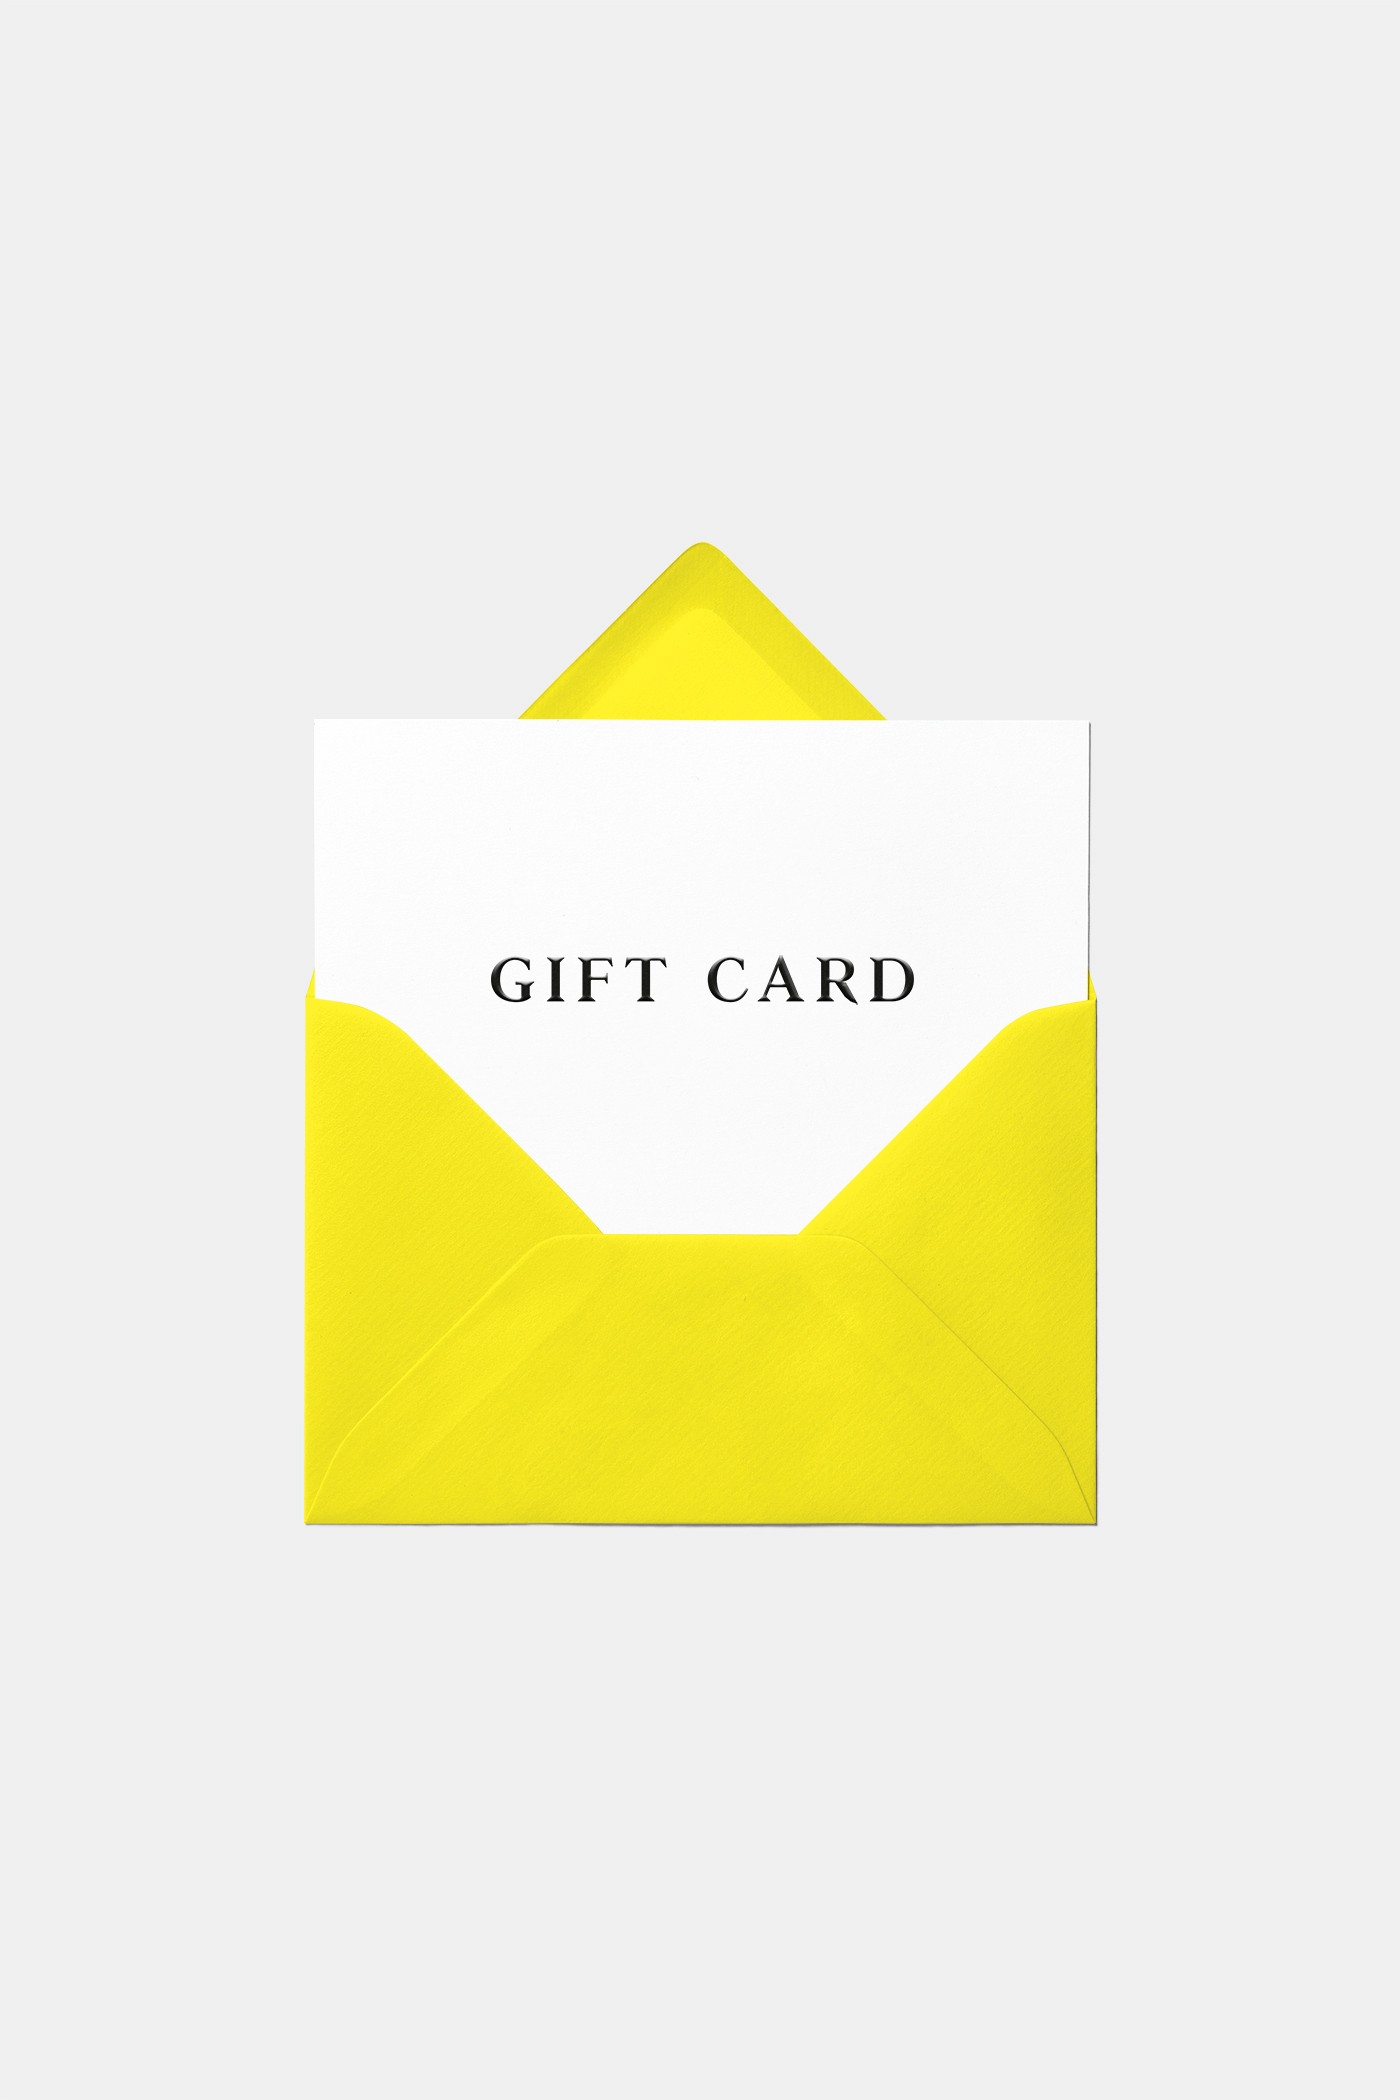 The gift e-card